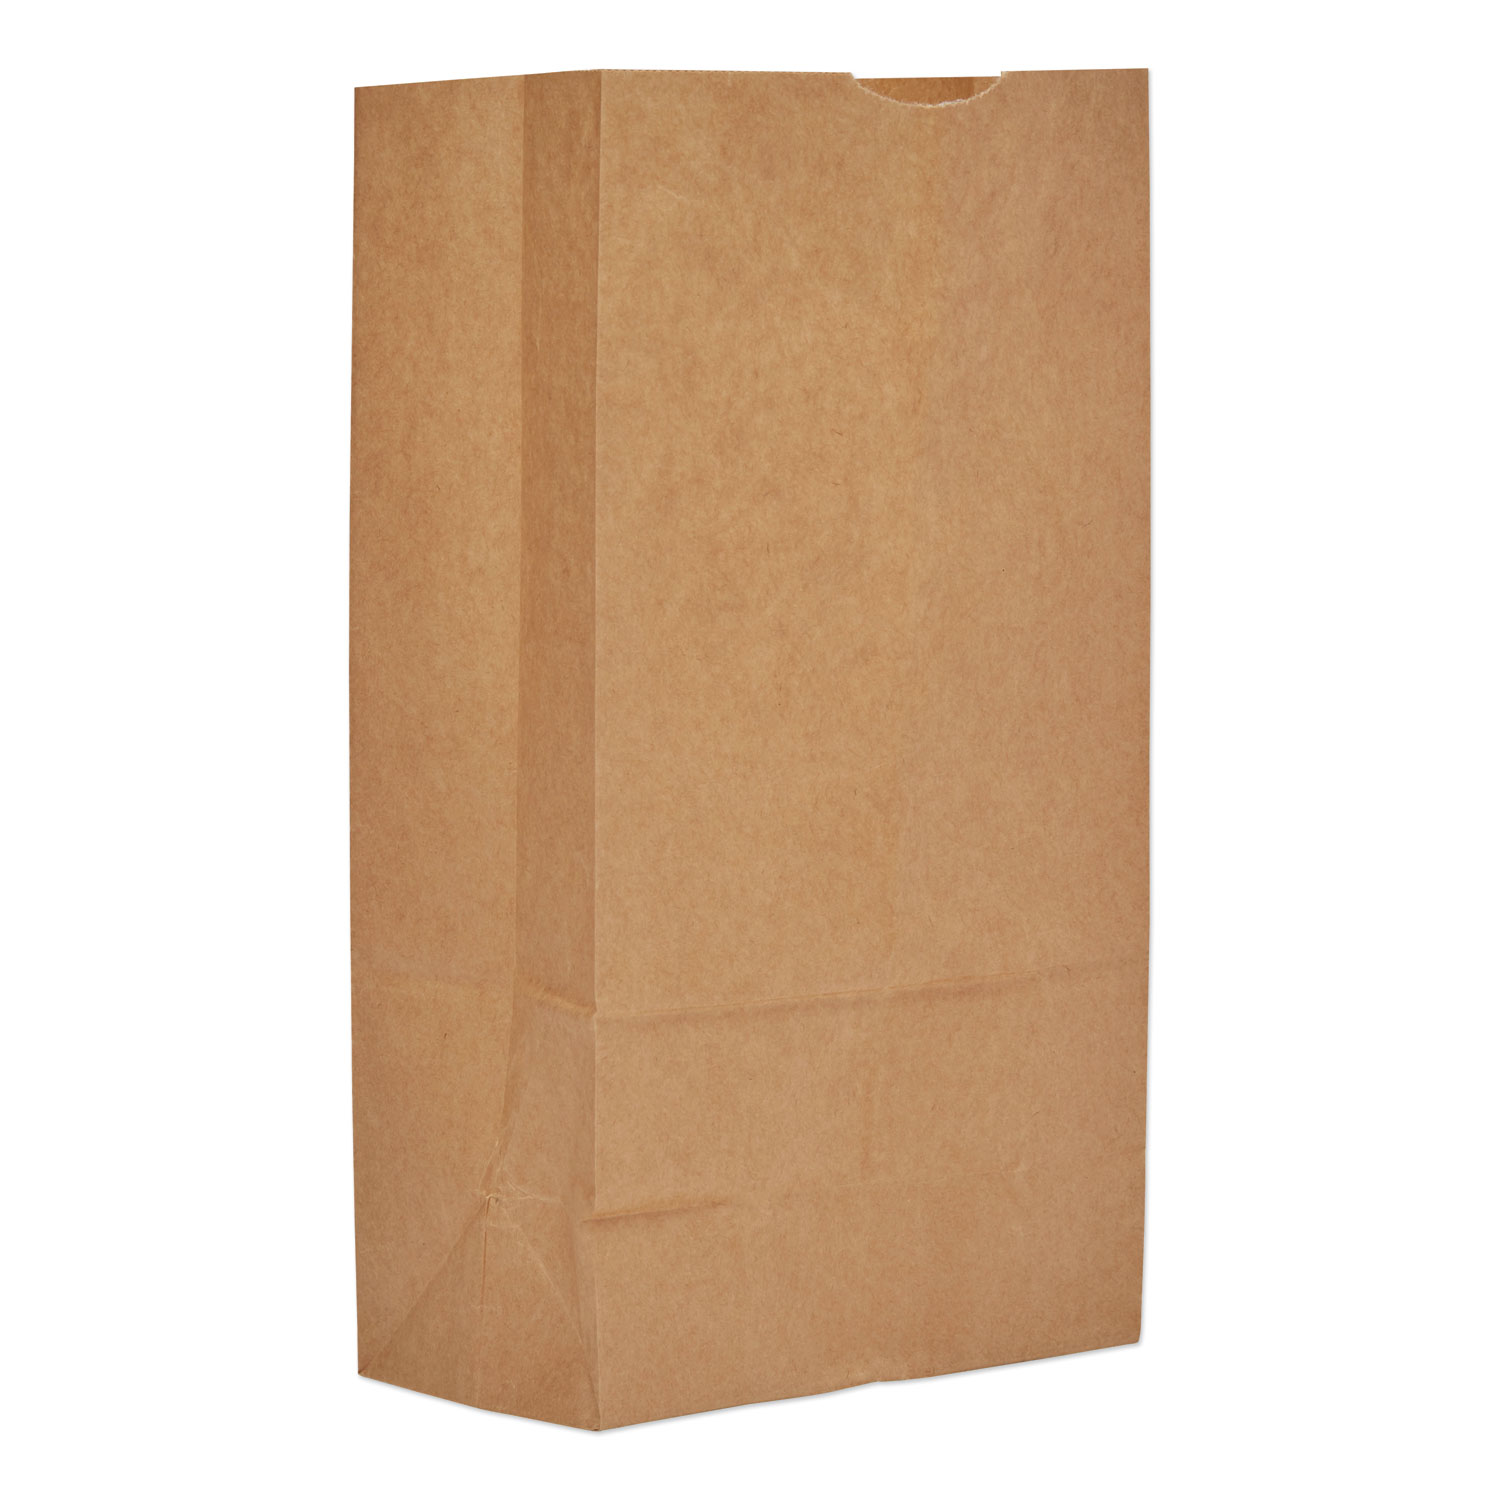  General 29812 Grocery Paper Bags, 50 lbs Capacity, #12, 7w x 4.38d x 13.75h, Kraft, 500 Bags (BAGGH12) 